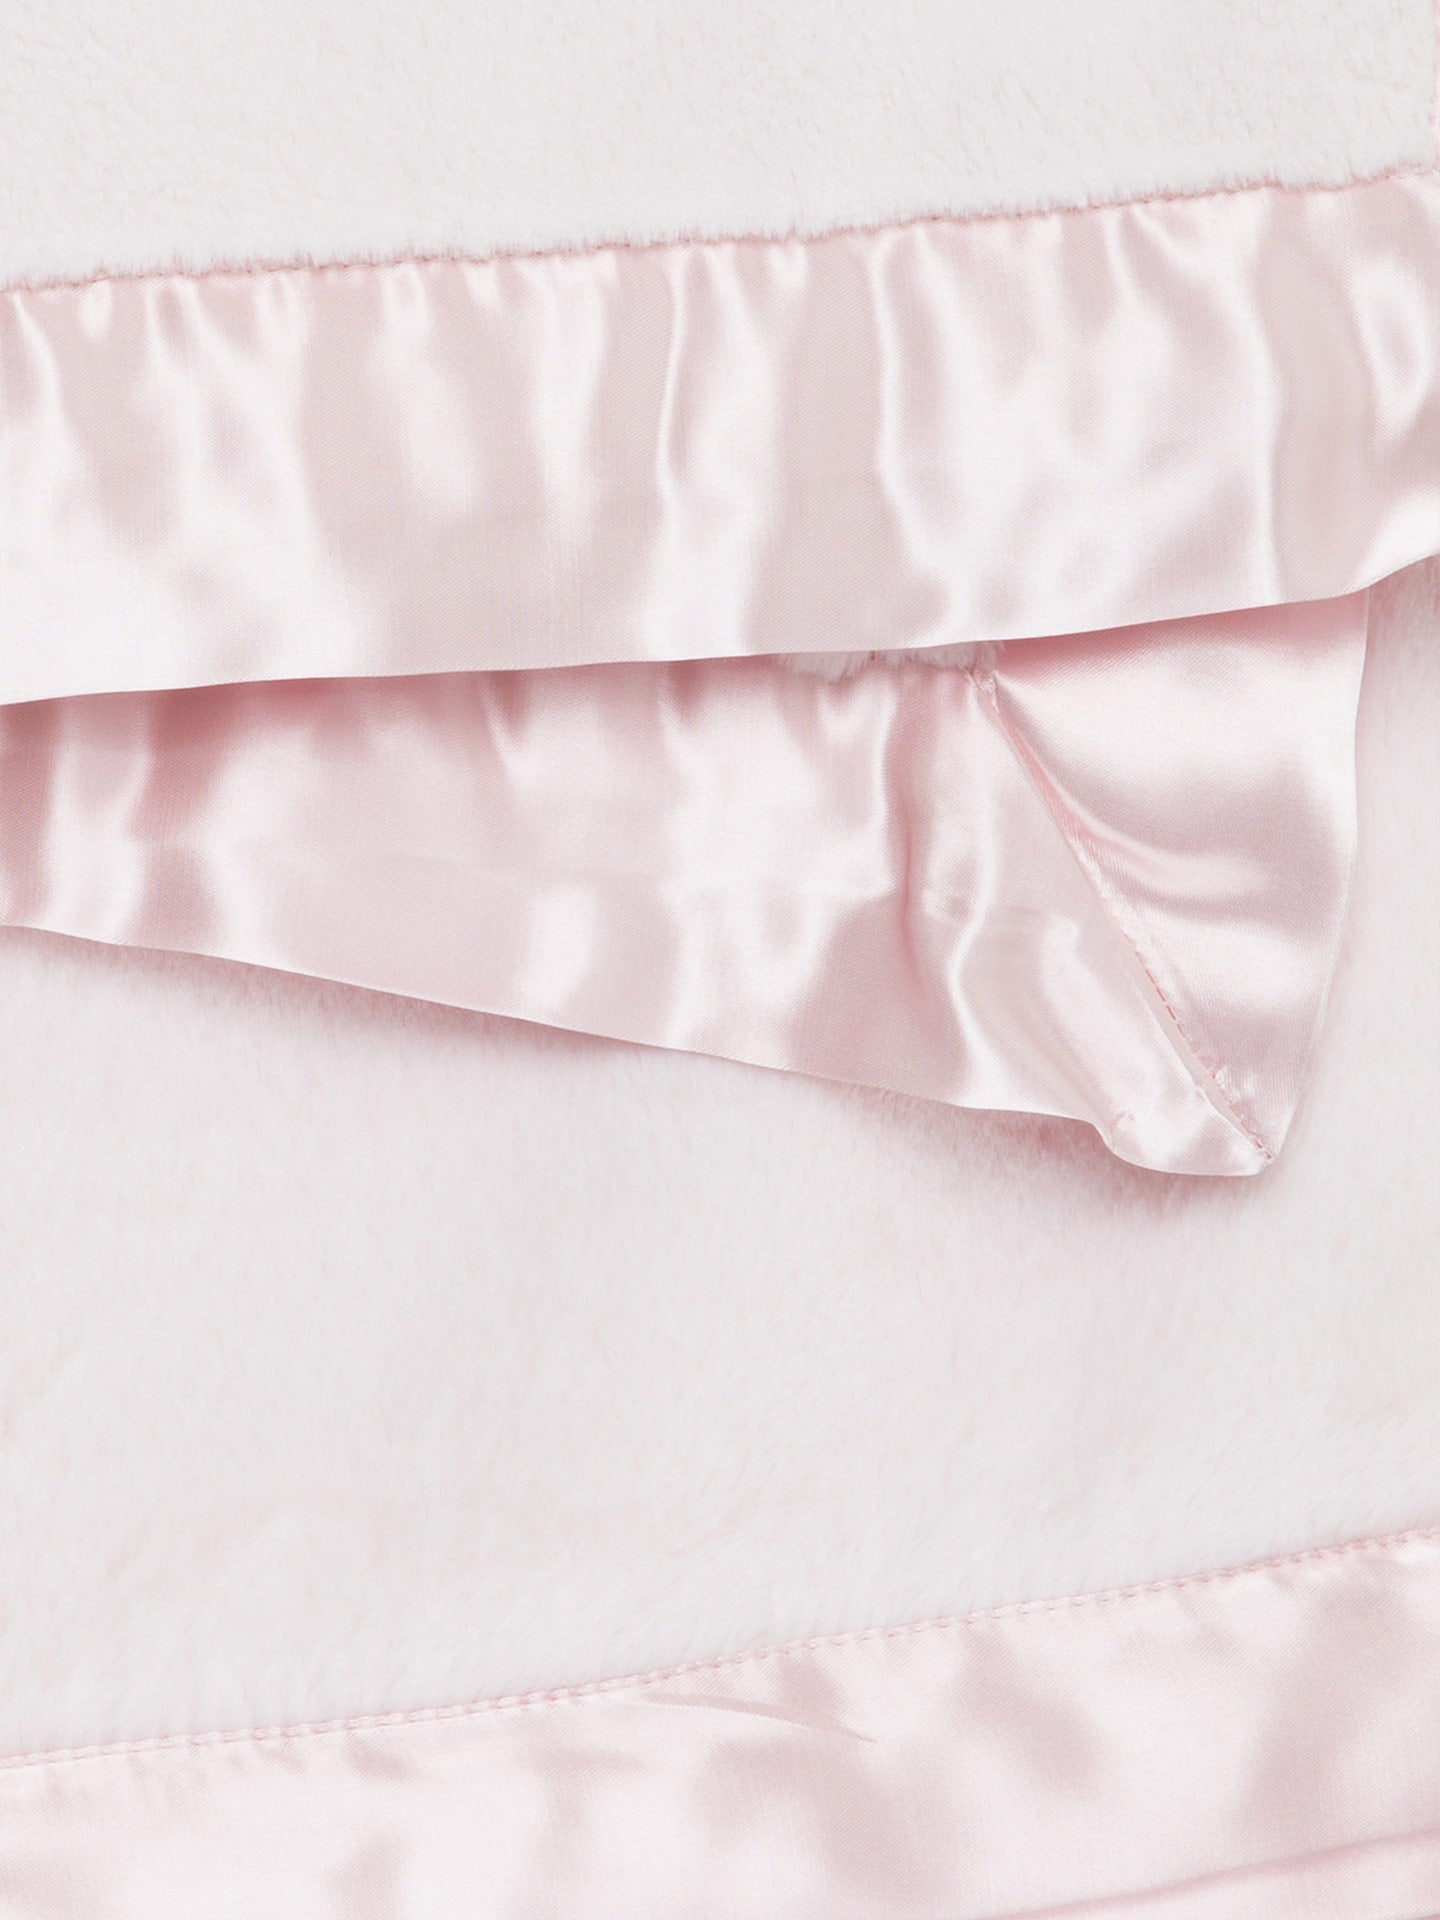 Pink Luxe™ Baby Blanket